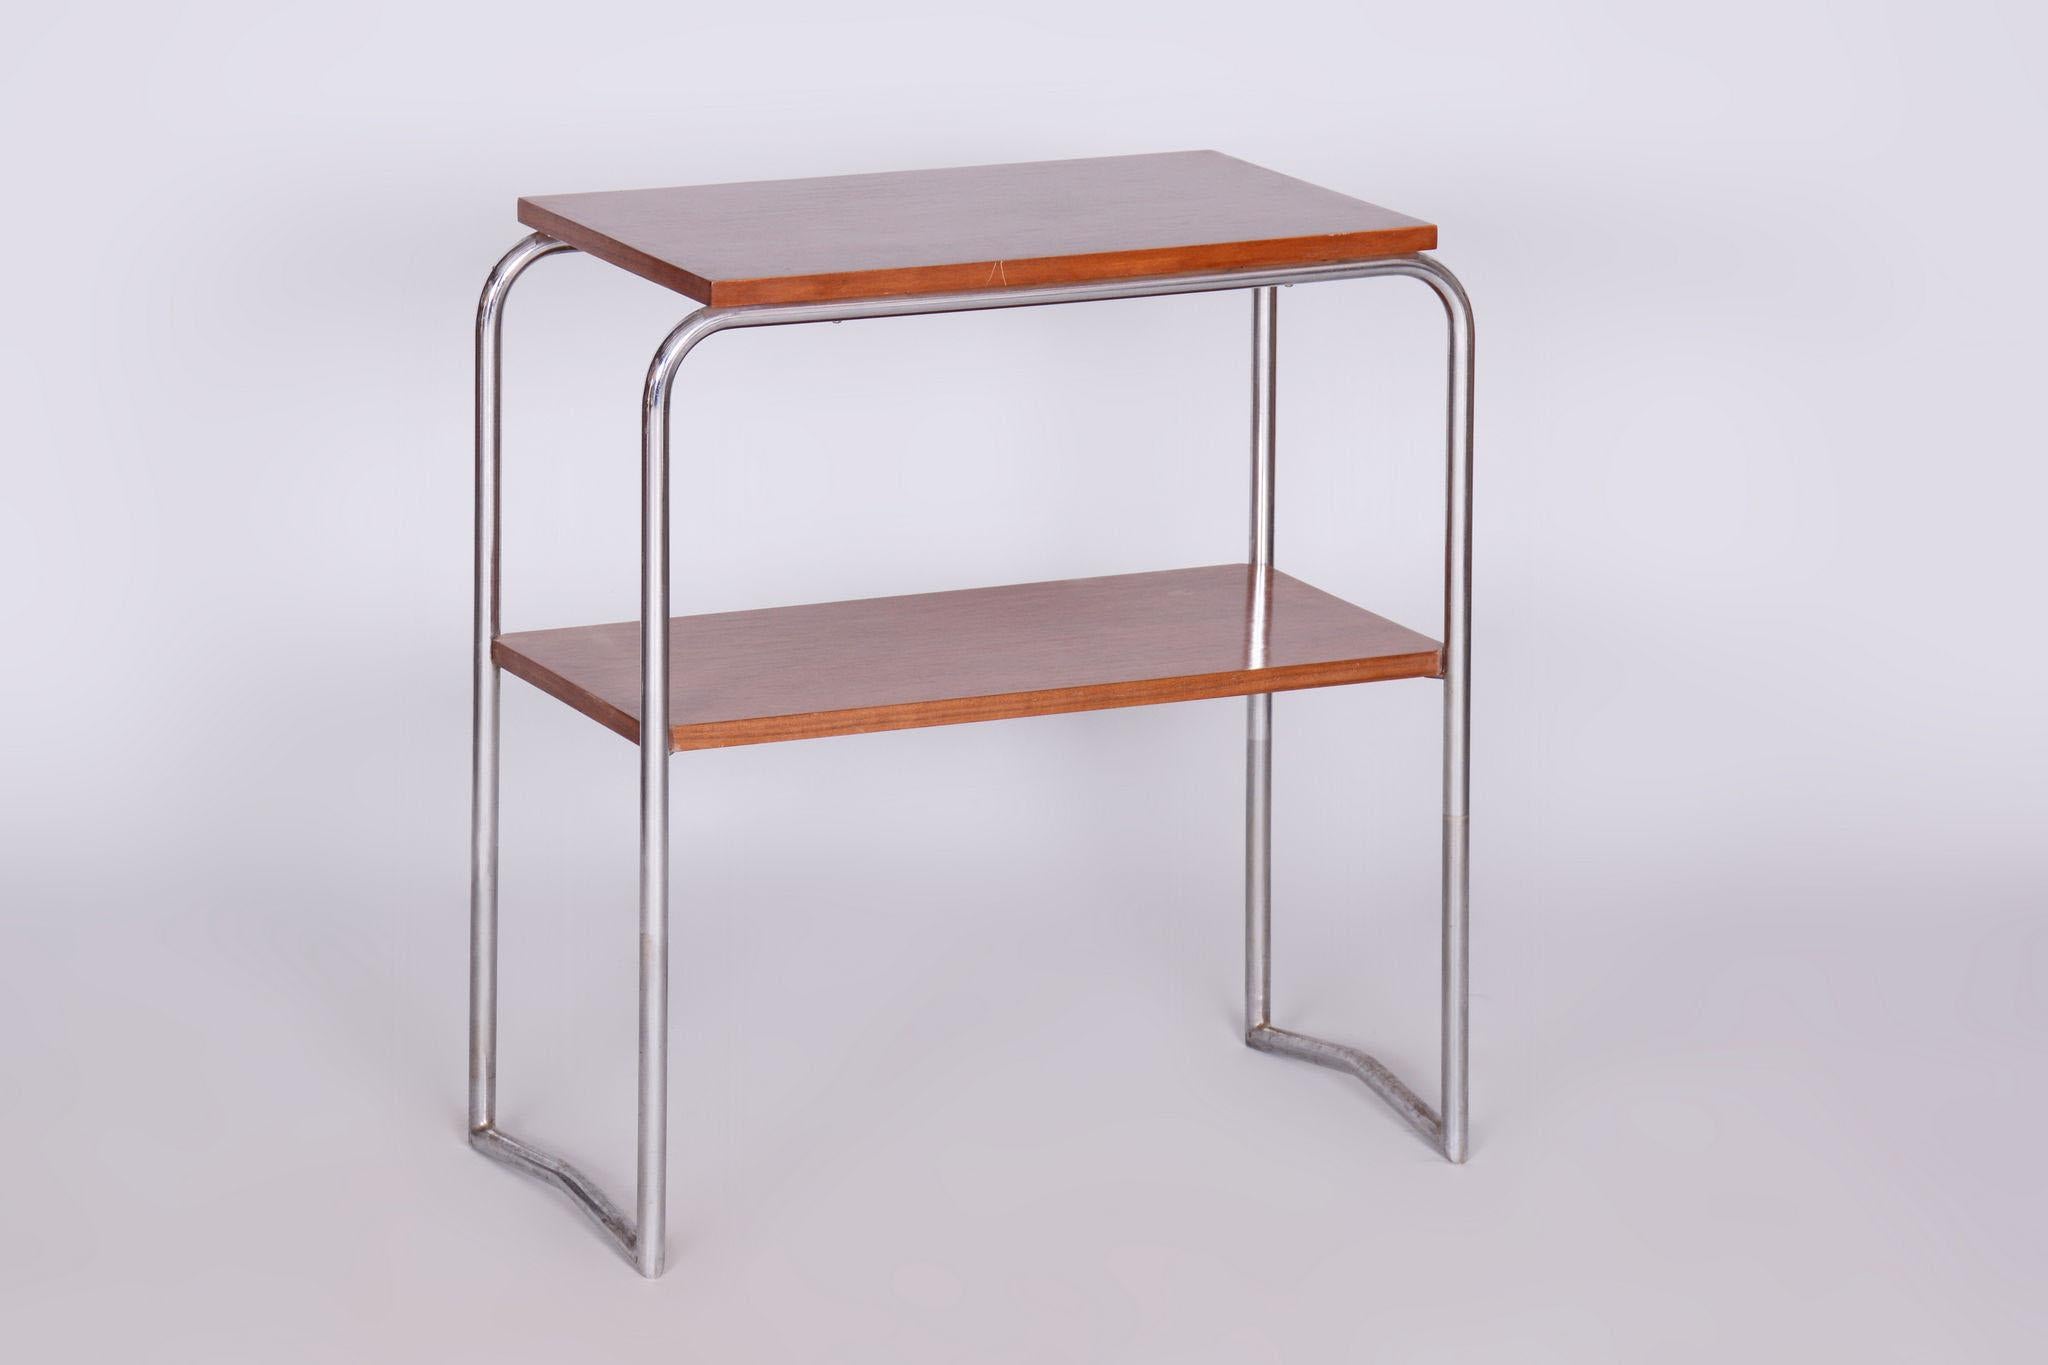 Restored Bauhaus Side Table, Hynek Gottwald, Walnut, Chrome, Czechia, 1930s For Sale 5